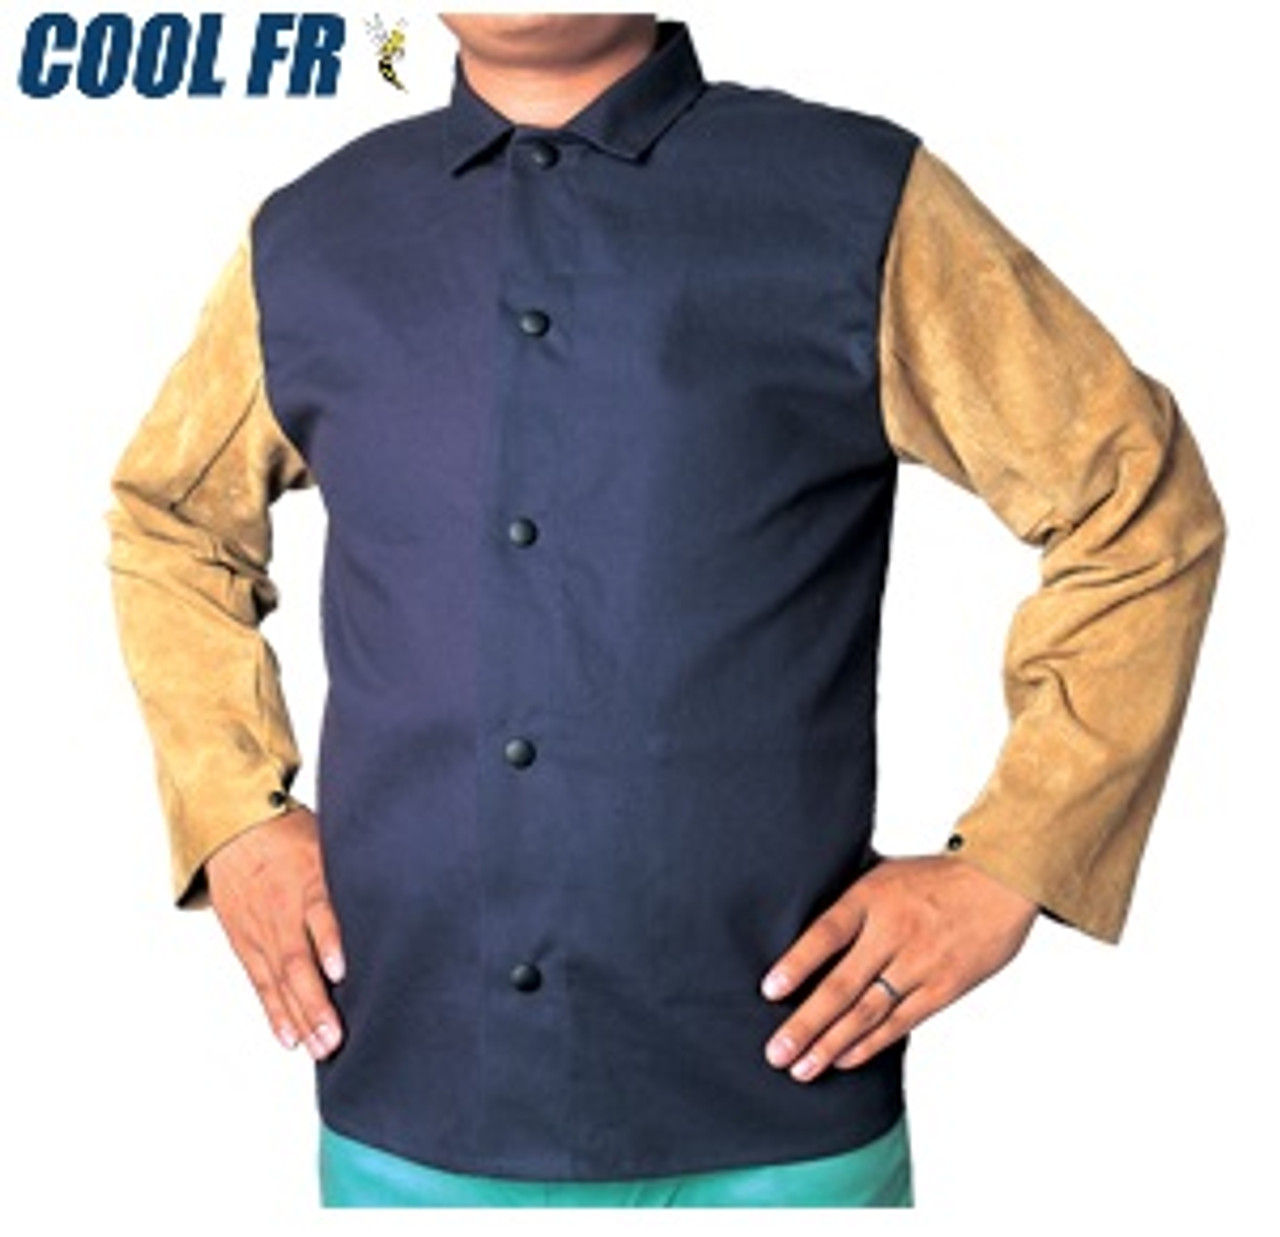 COOL FR Jacket with Side Split Cowhide Sleeves - Fire Resistant  ## 33-8060 ##